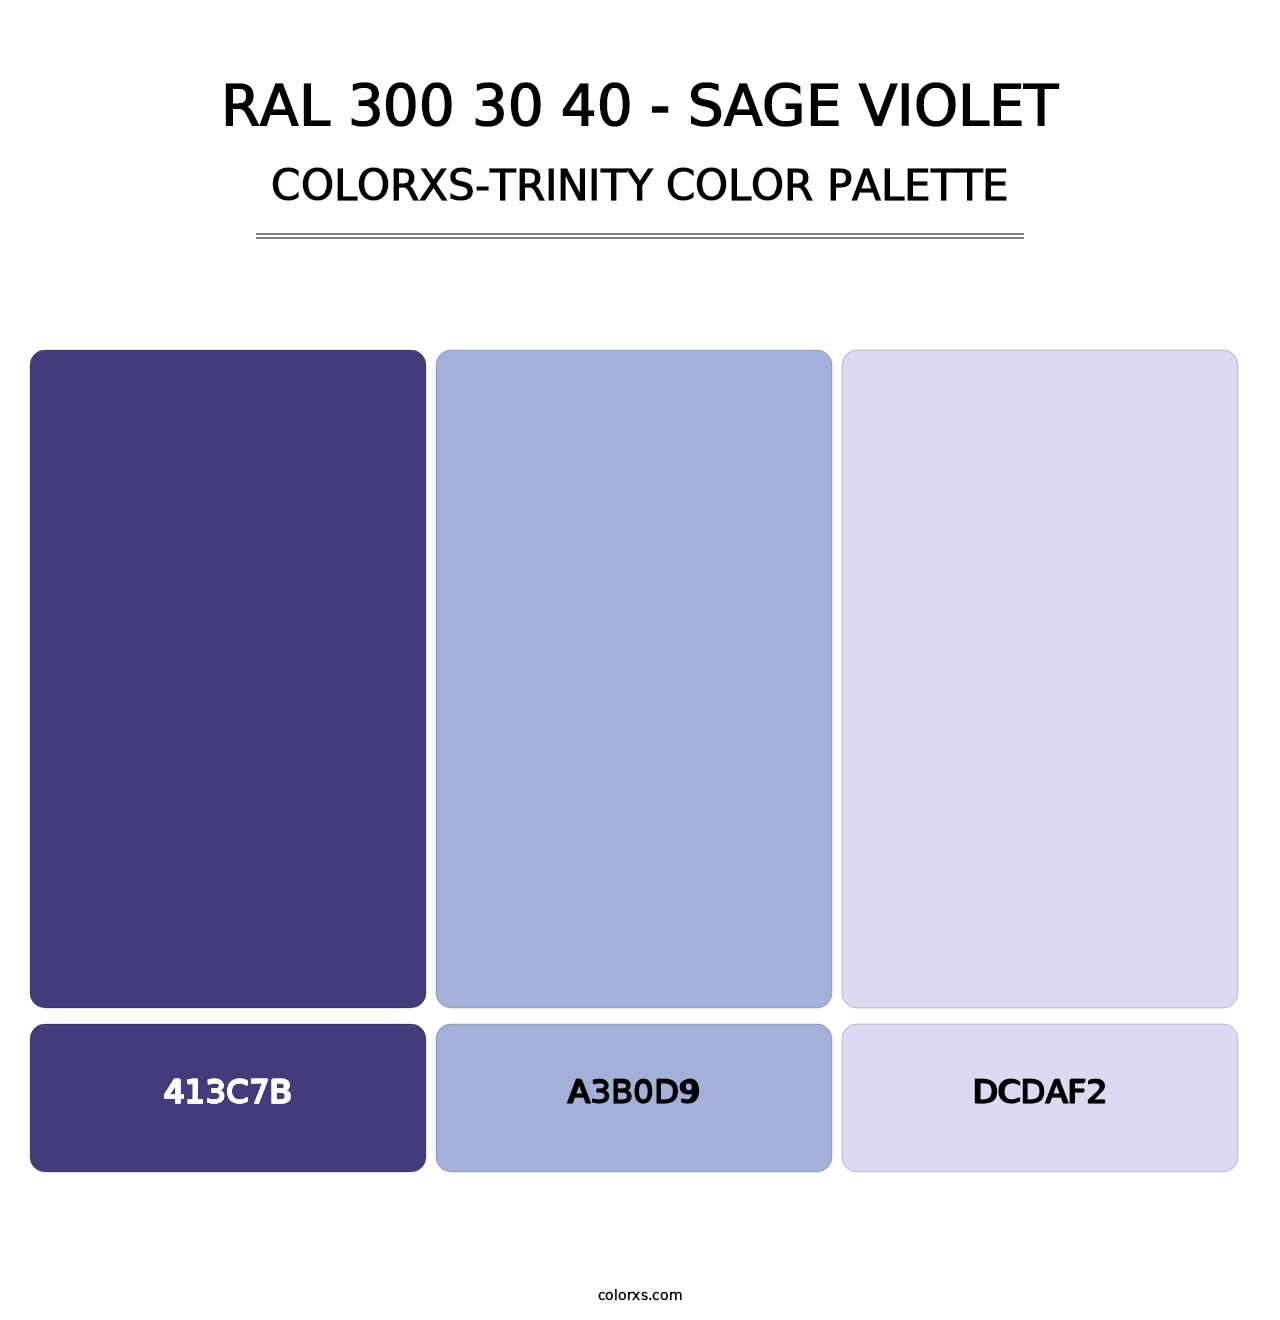 RAL 300 30 40 - Sage Violet - Colorxs Trinity Palette